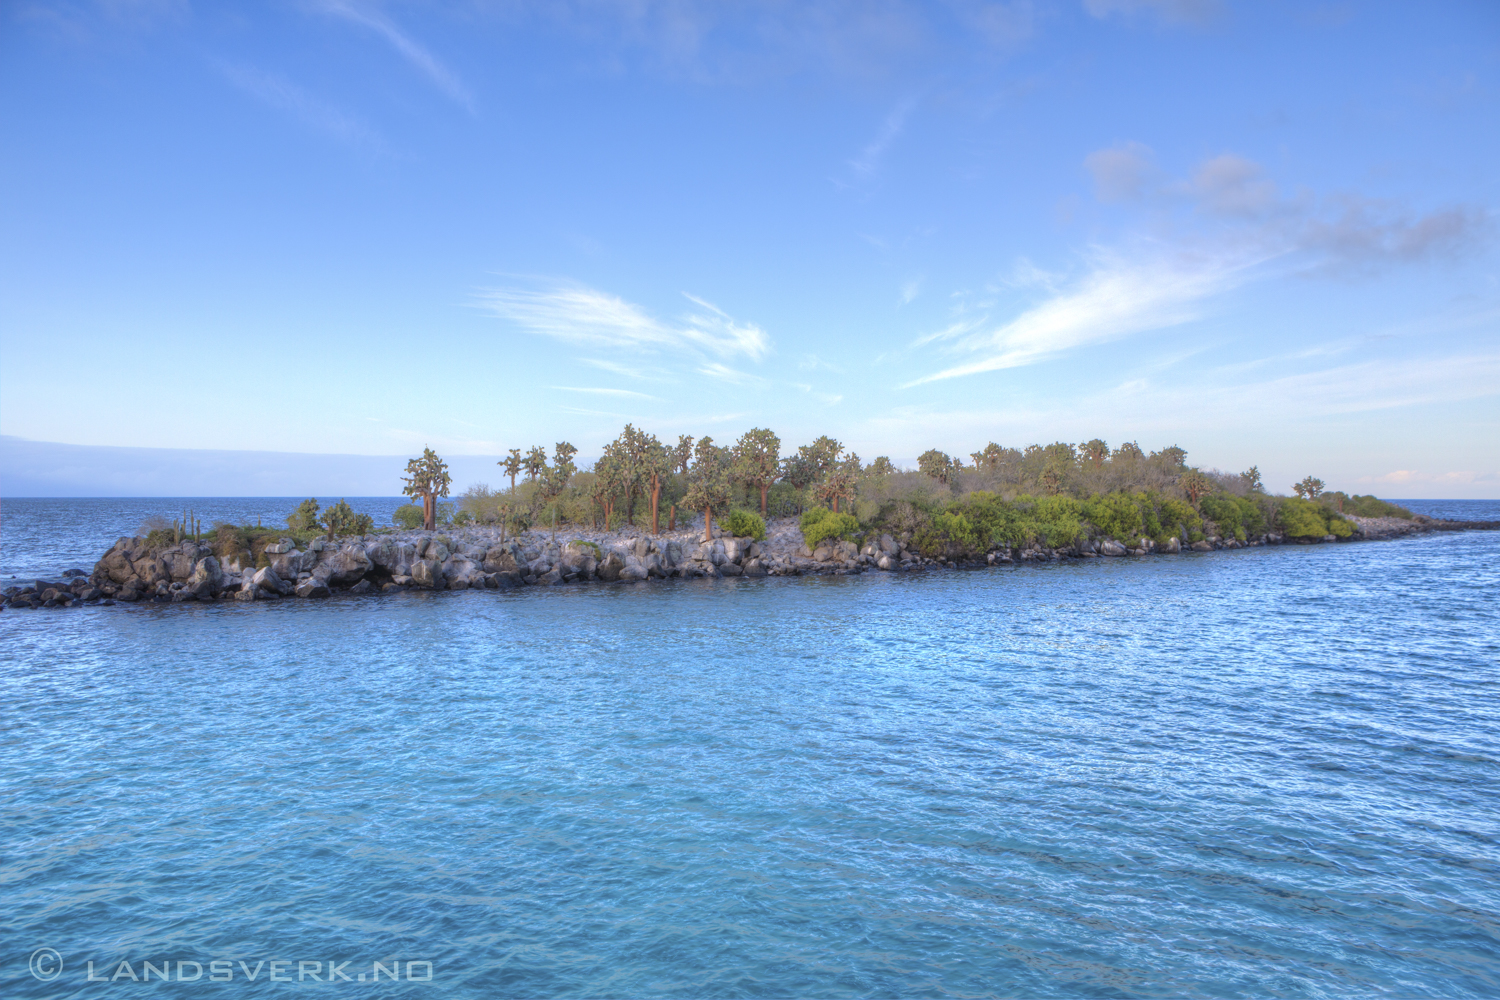 Islas Plaza, Isla Santa Cruz, Galapagos. 

(Canon EOS 5D Mark III / Canon EF 24-70mm f/2.8 L USM)